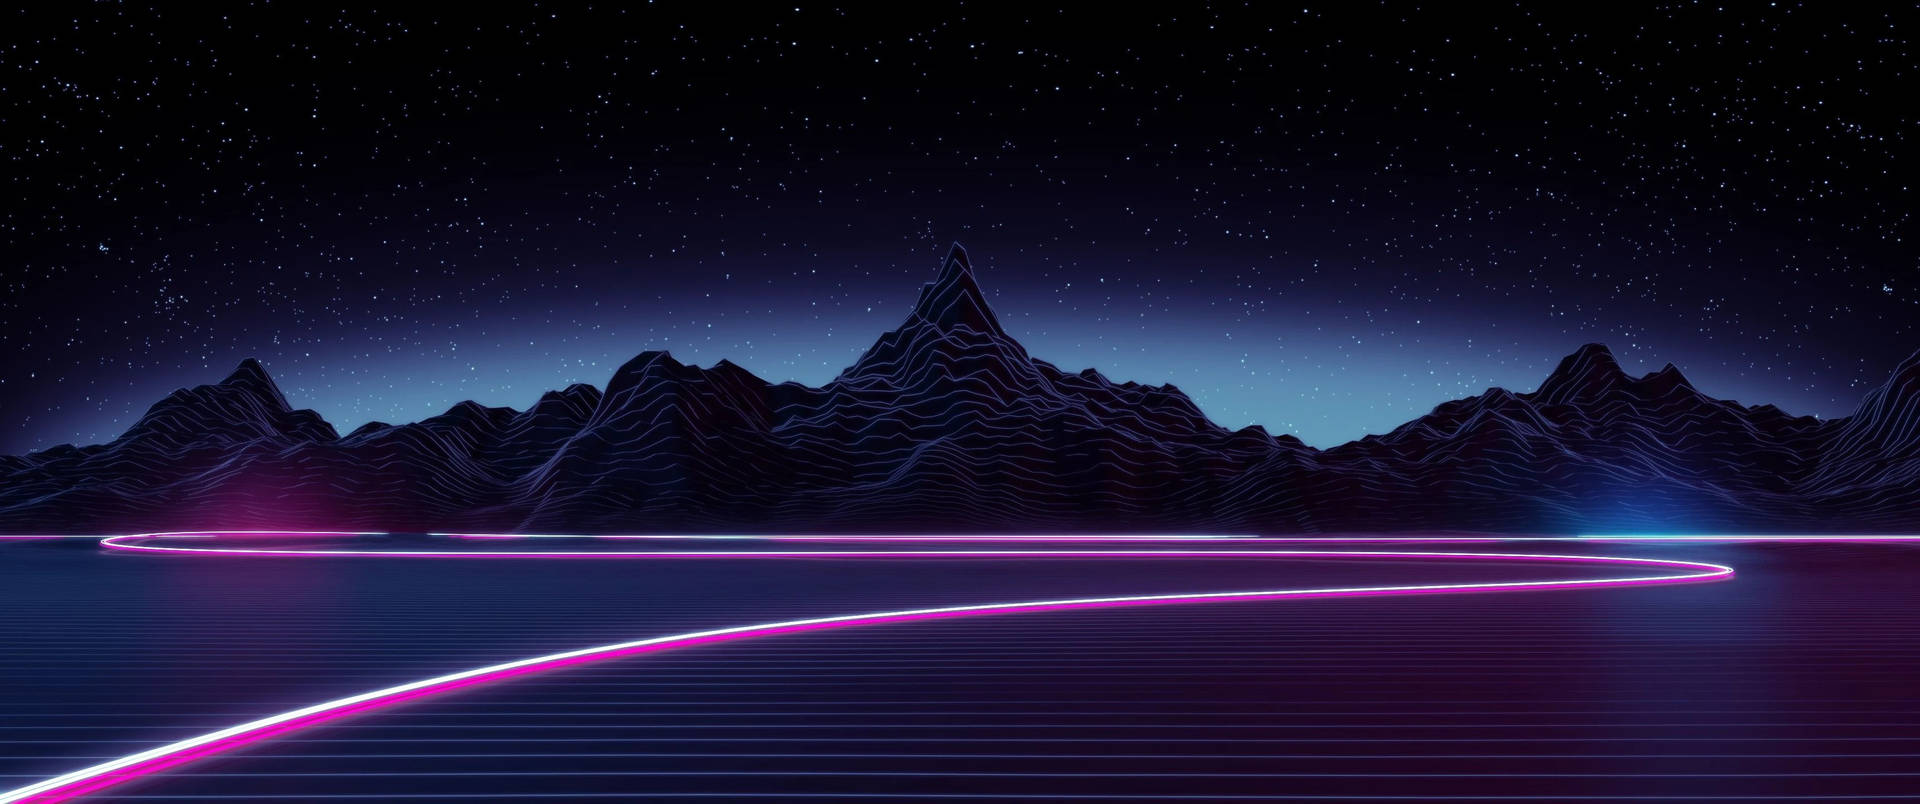 Neon Mountain 4k Lo Fi Wallpaper